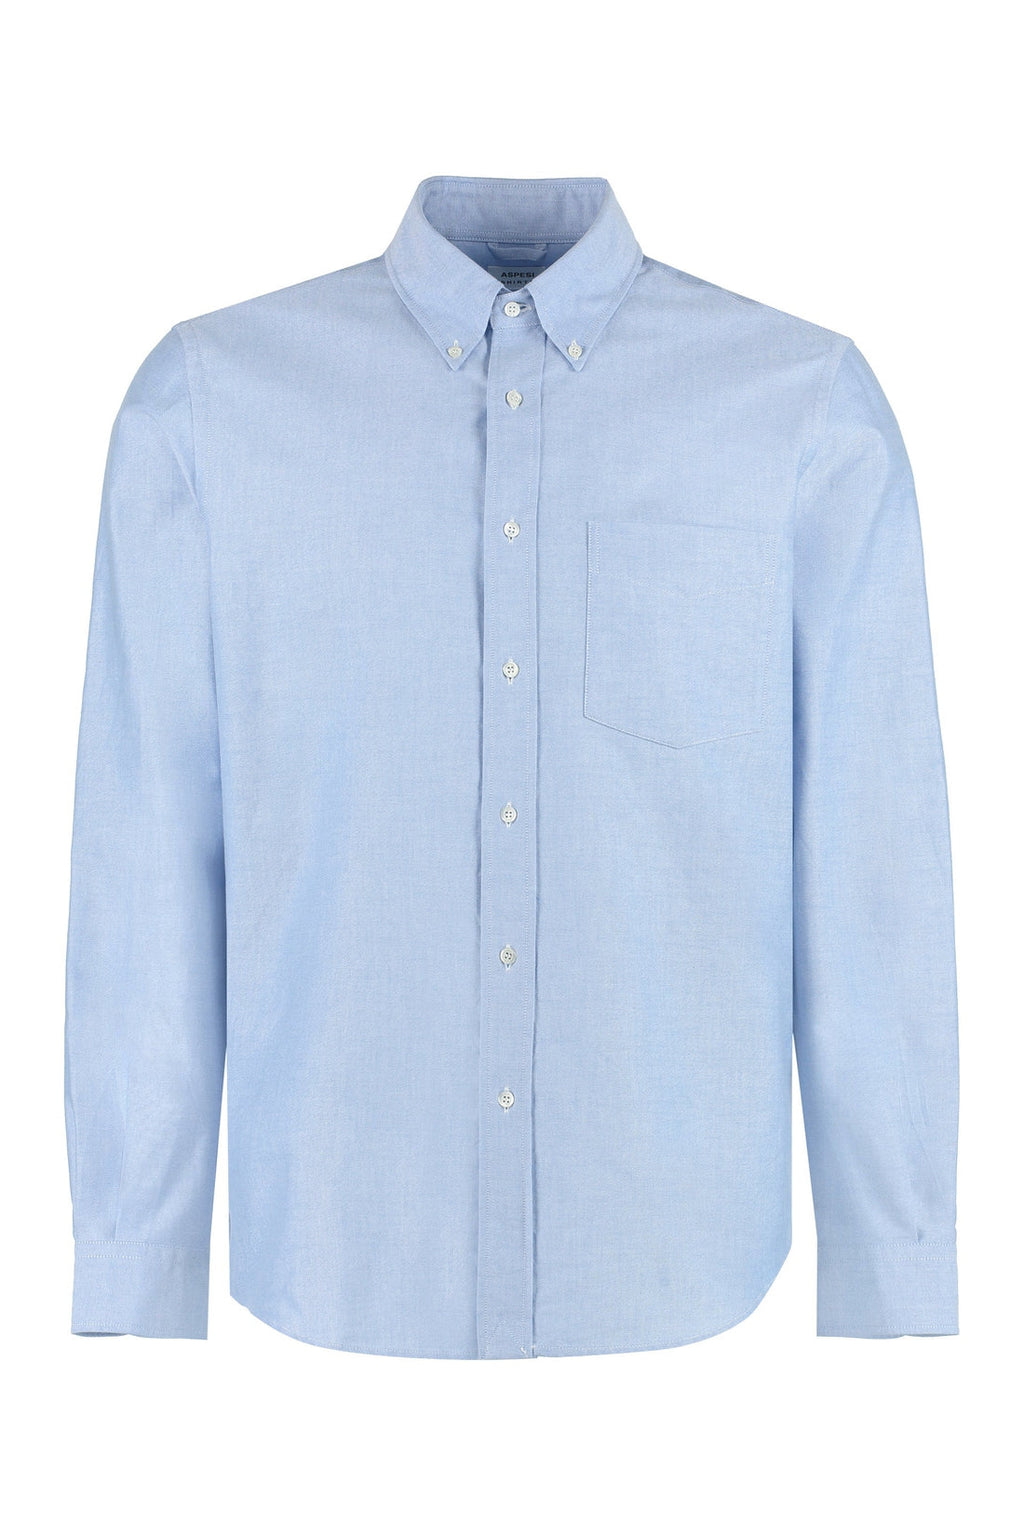 Aspesi-OUTLET-SALE-Cotton poplin shirt-ARCHIVIST